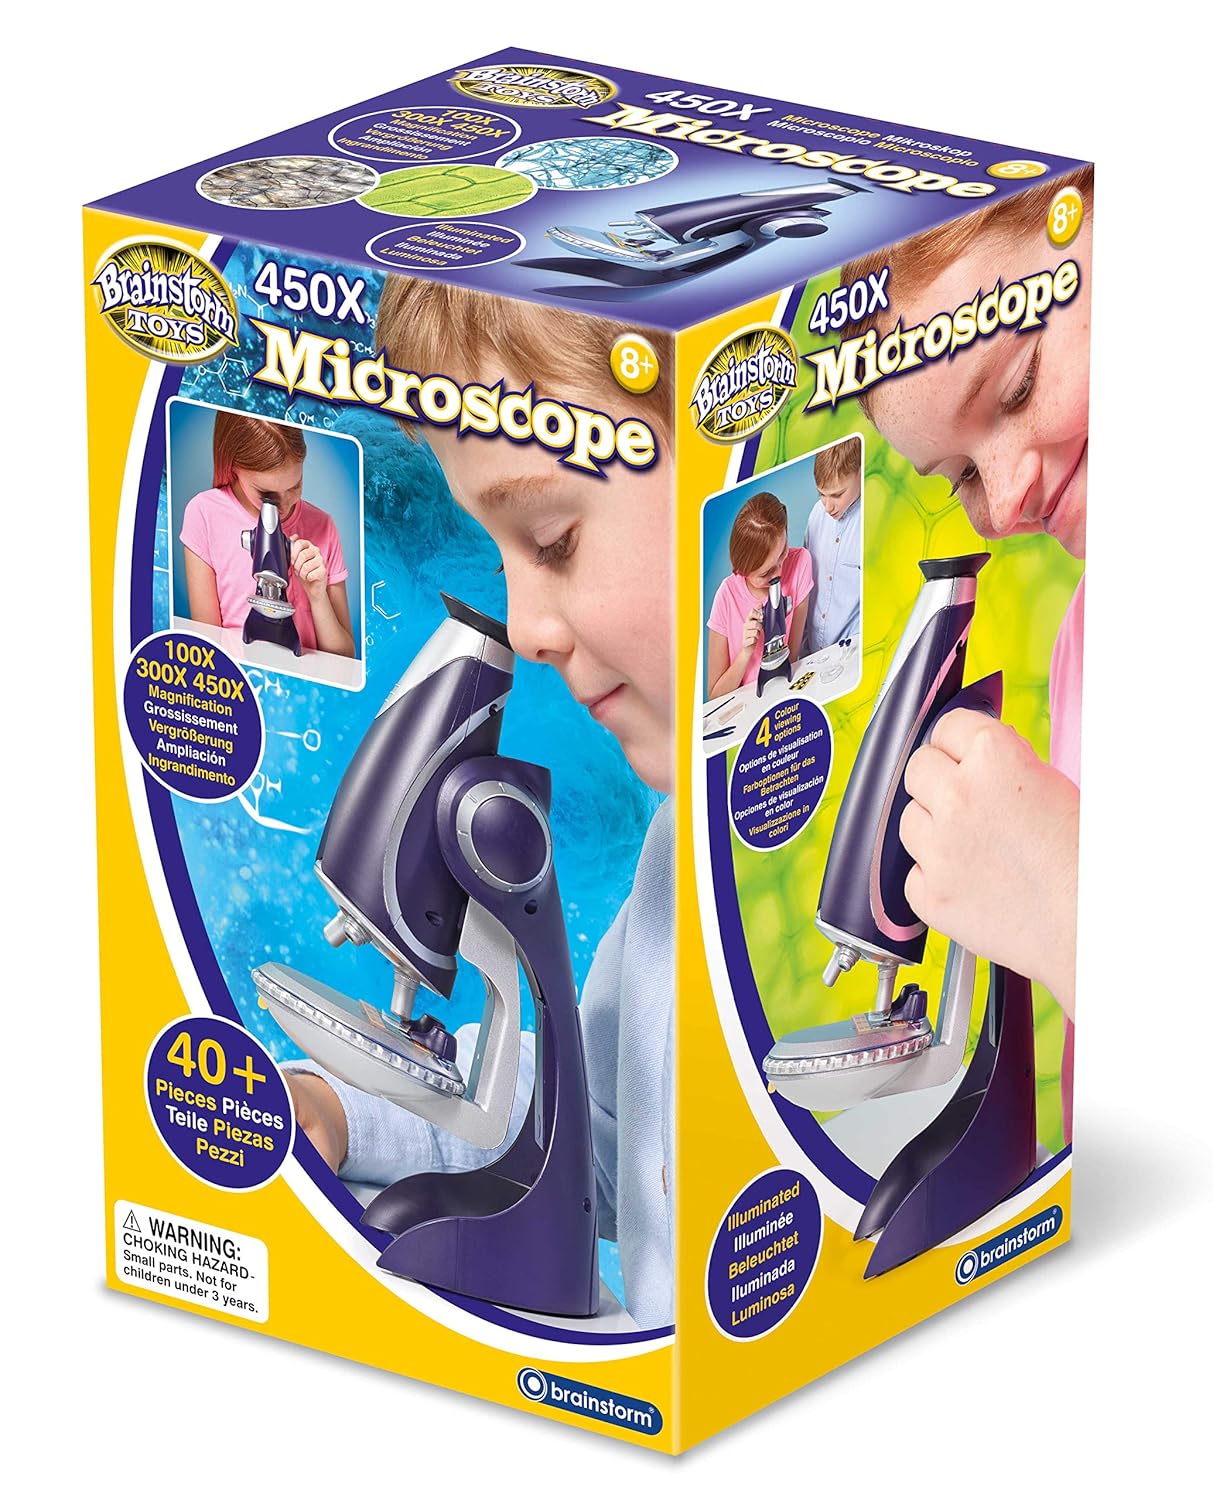 Brainstorm Microscope (450x)